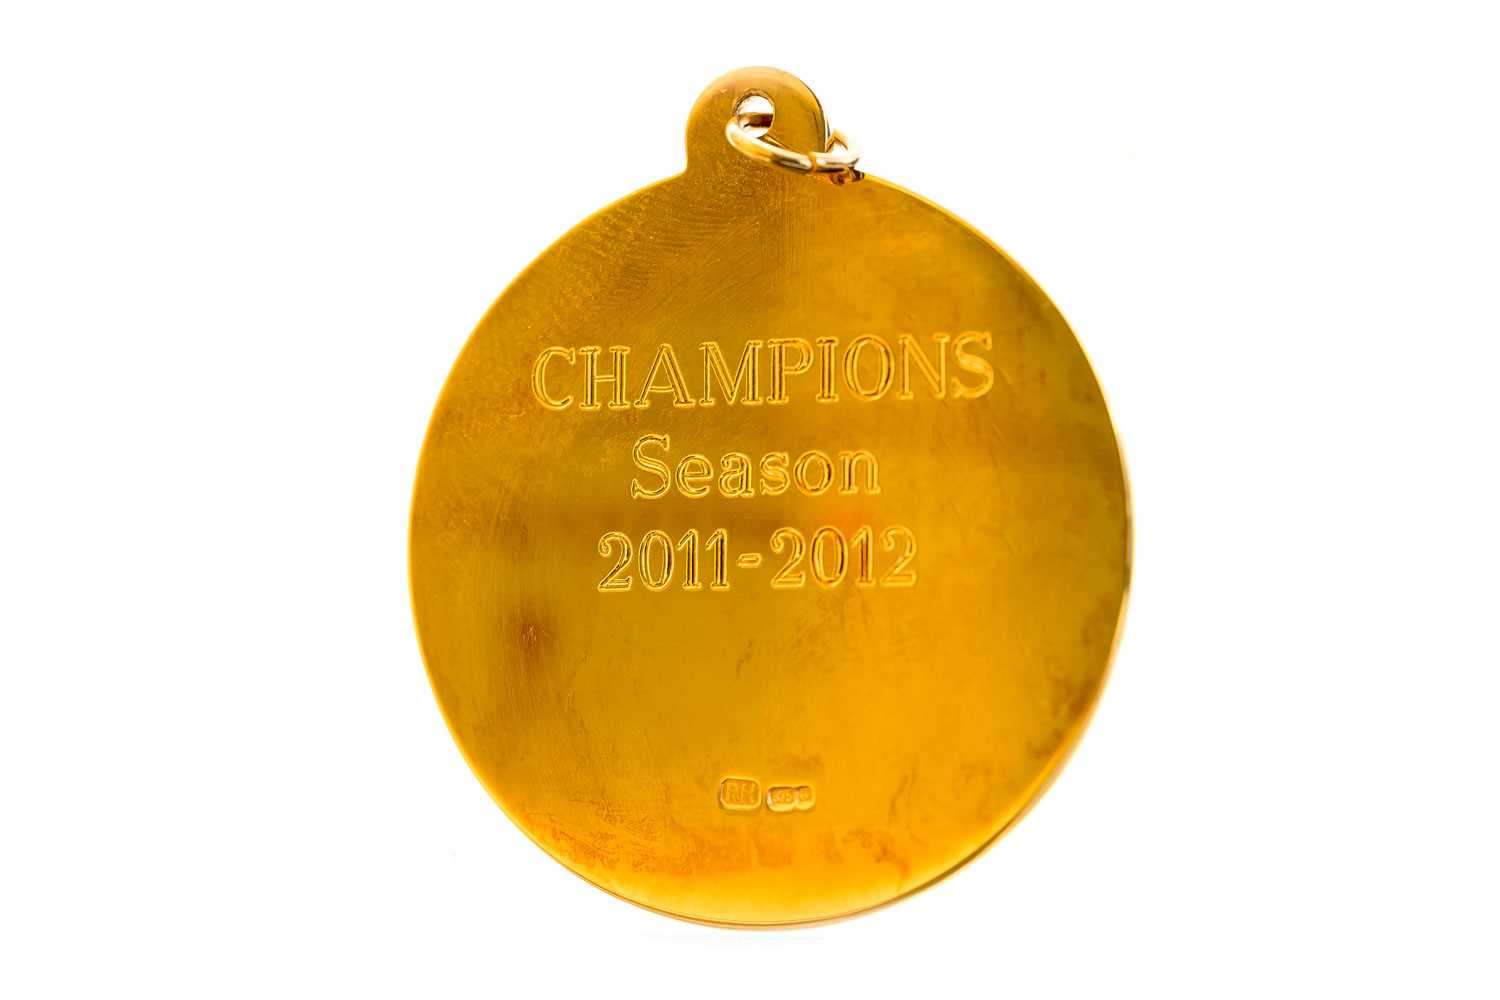 CELTIC F.C., SPL CHAMPIONS WINNERS GOLD MEDAL, 2011/12 - Image 2 of 2